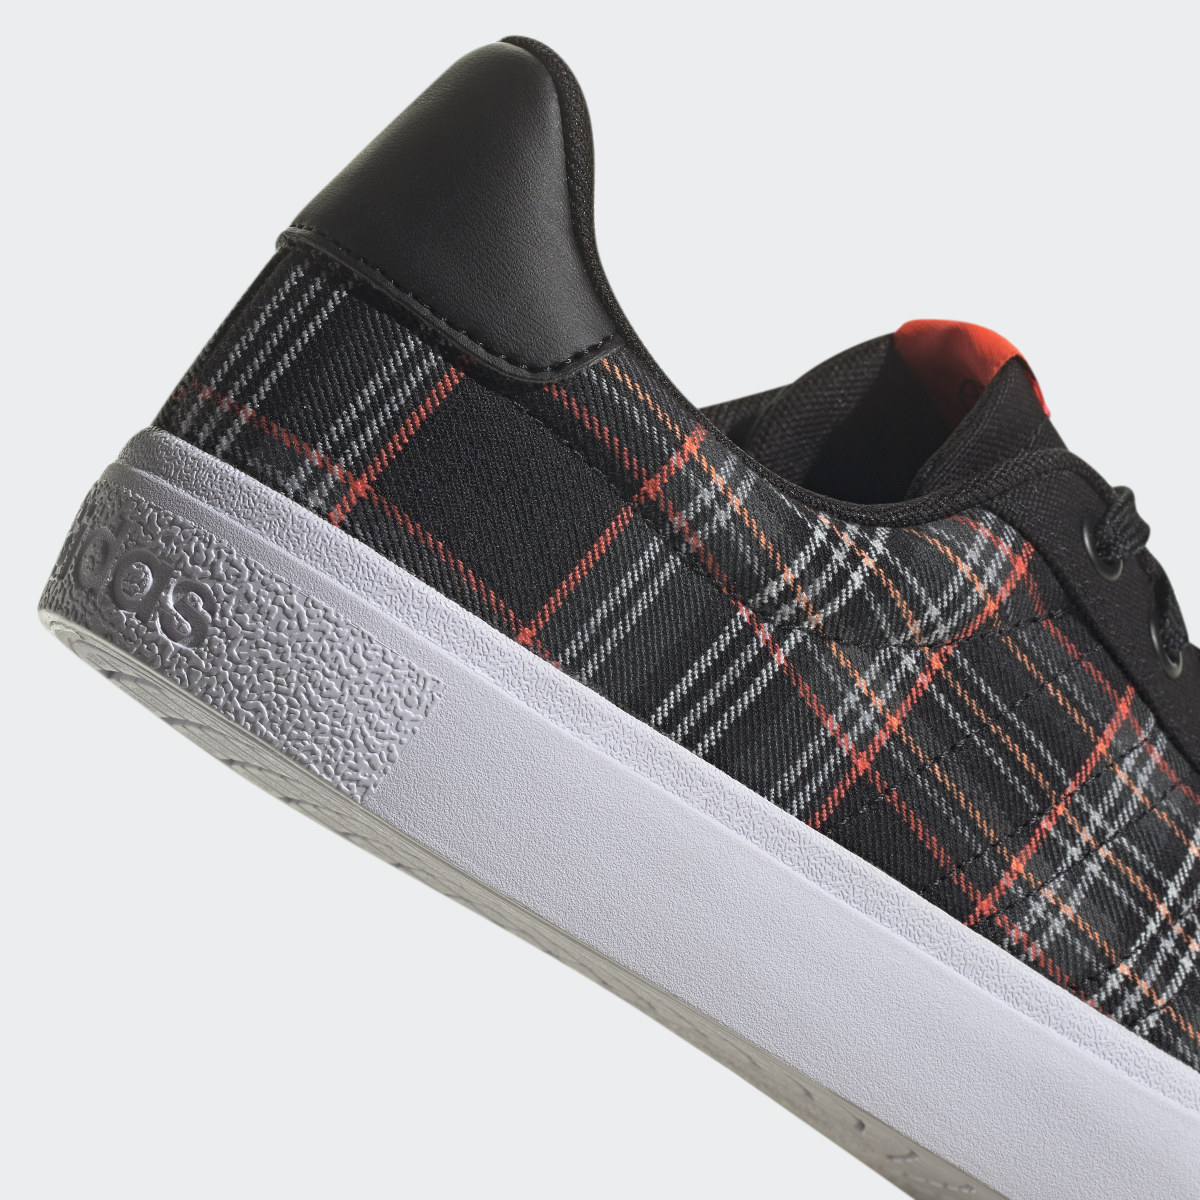 Adidas Scarpe Vulc Raid3r Lifestyle Skateboarding 3-Stripes Branding. 9